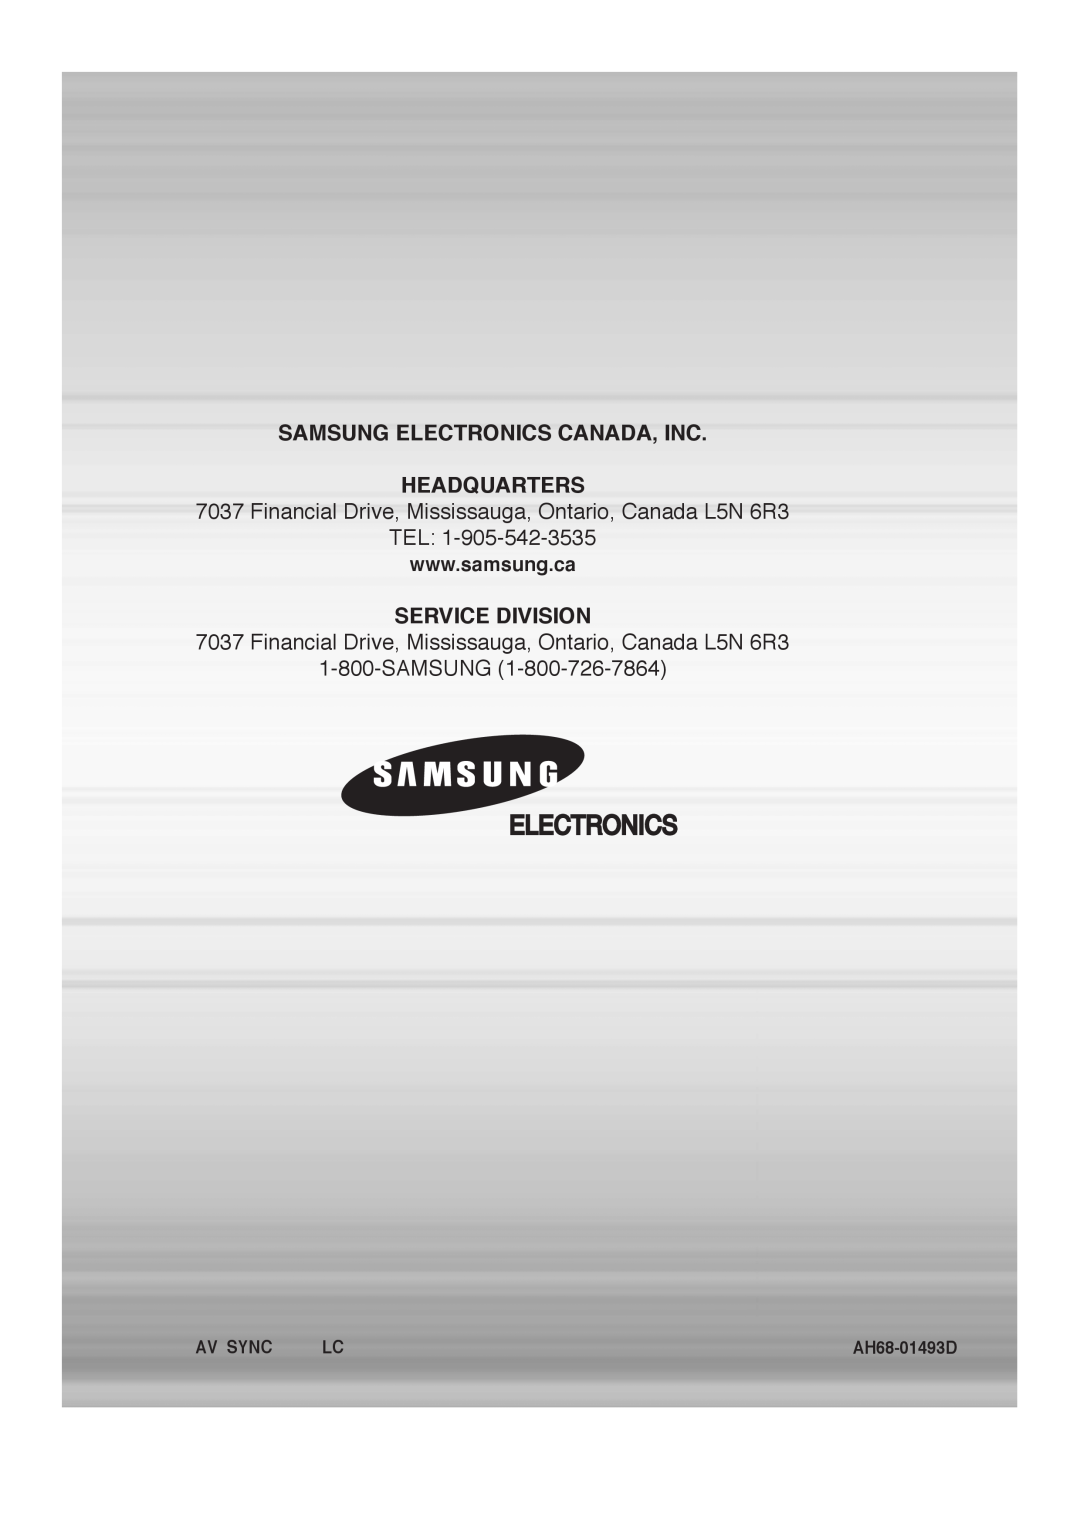 Samsung 20051111103302296 Samsung Electronics Canada, Inc Headquarters, Tel, Service Division, AH68-01493D 